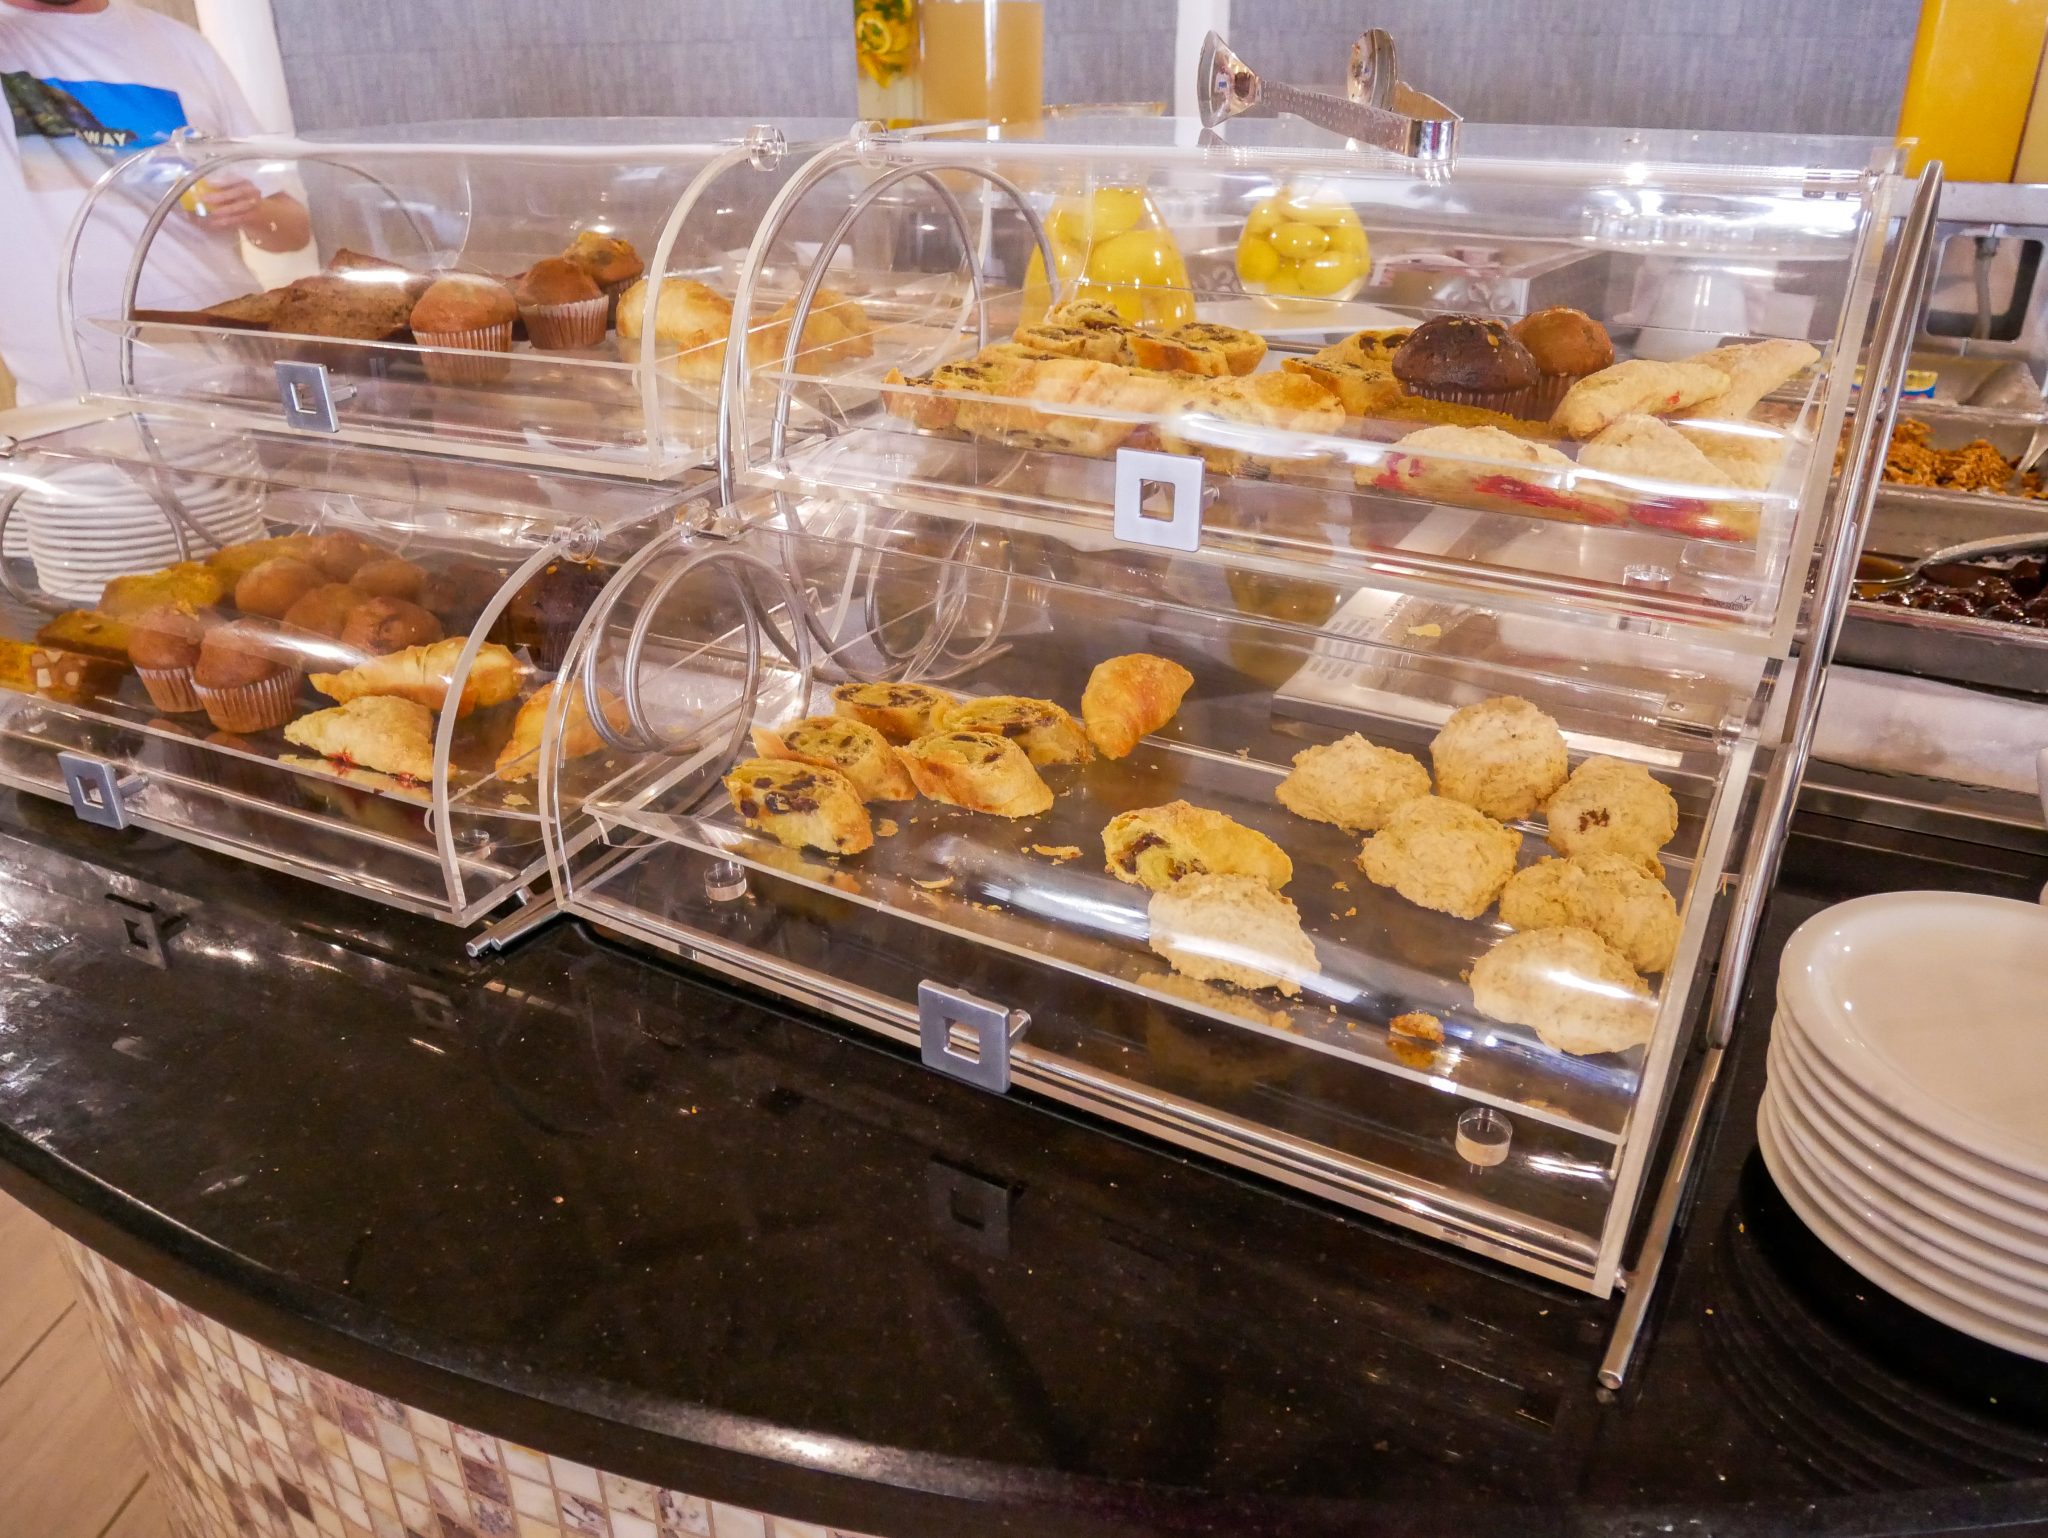 Breakfast pastries in their clear bread bins